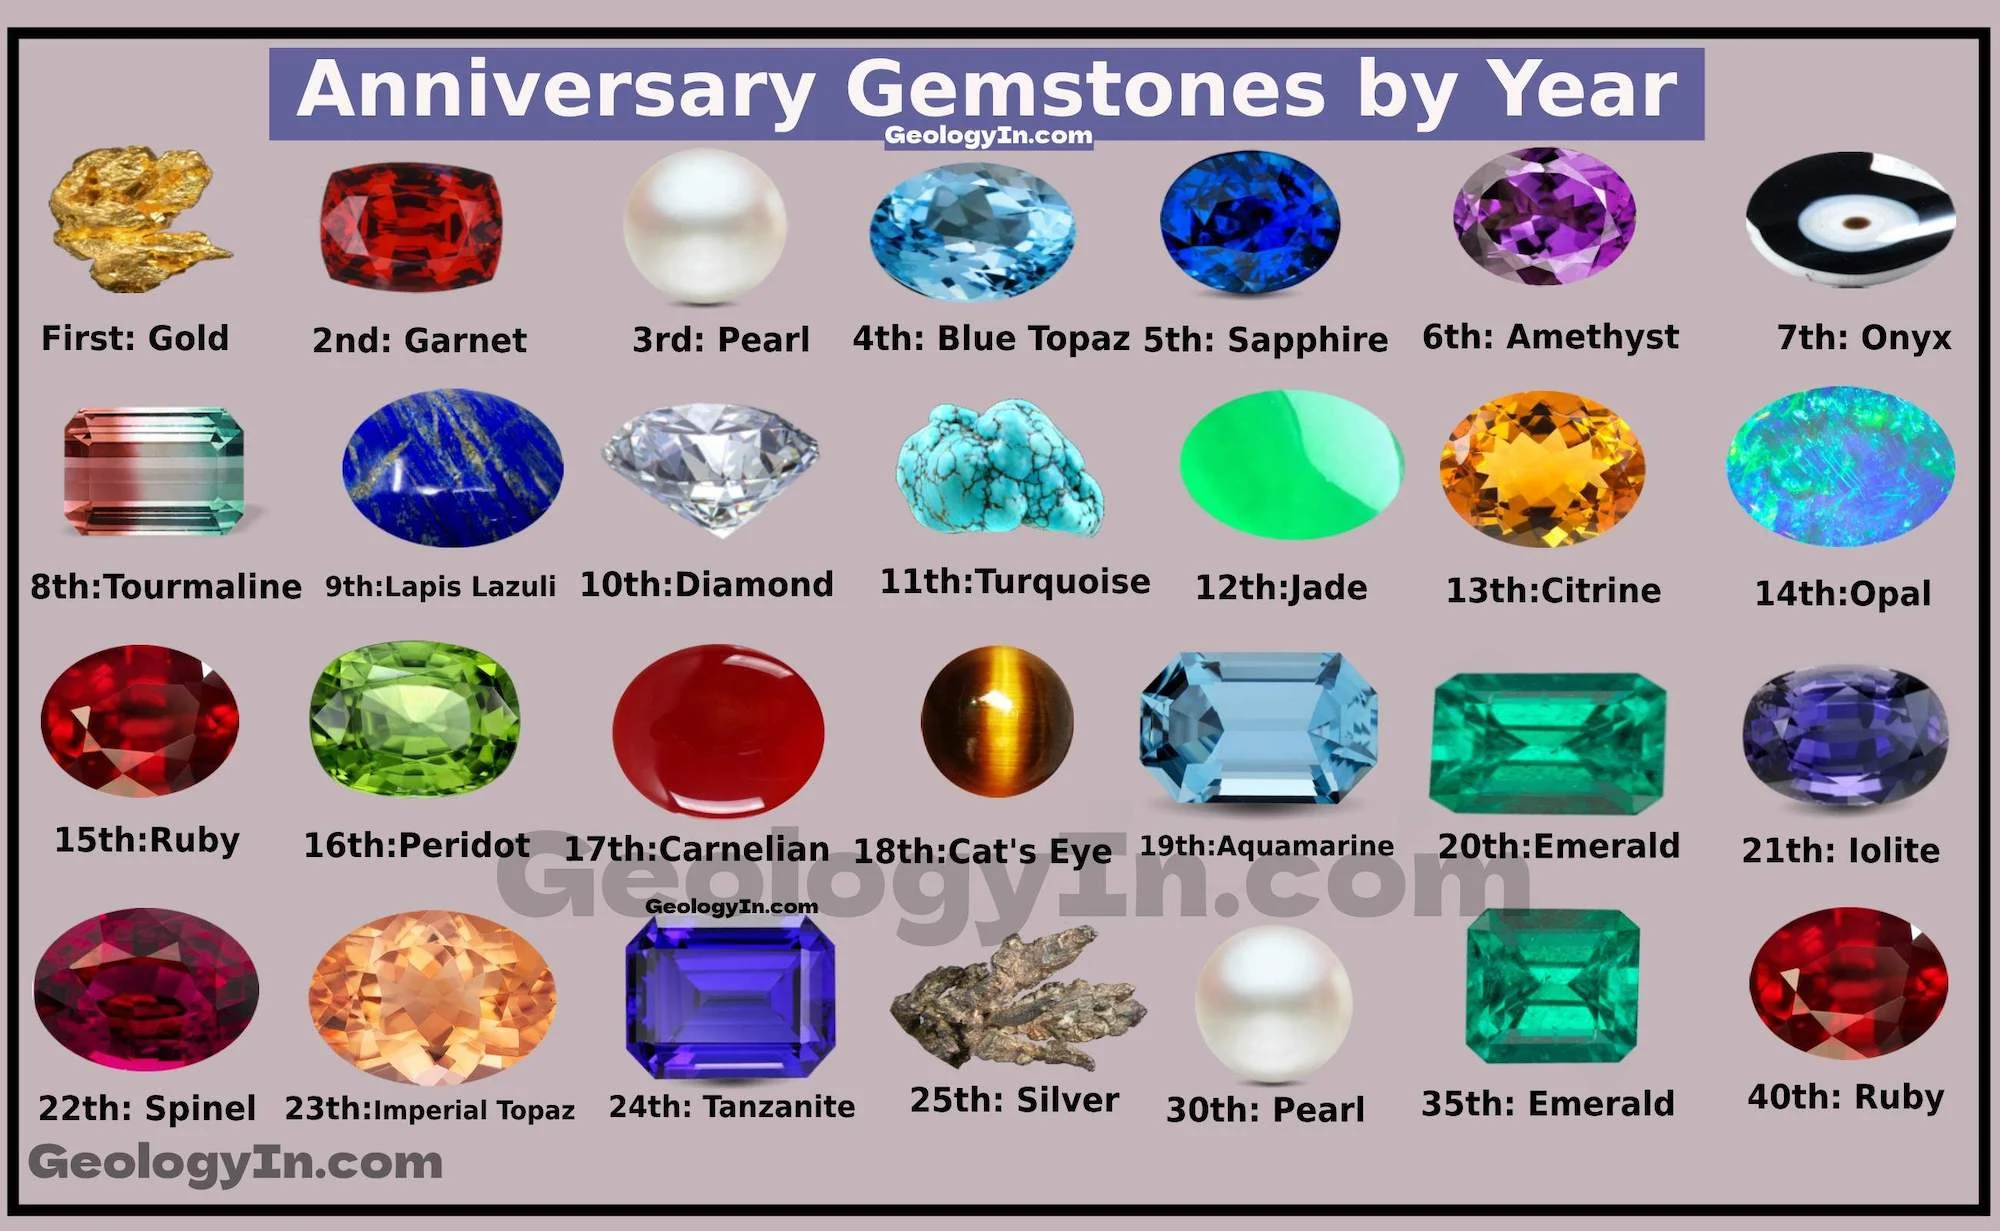 Anniversary Gemstones by Year